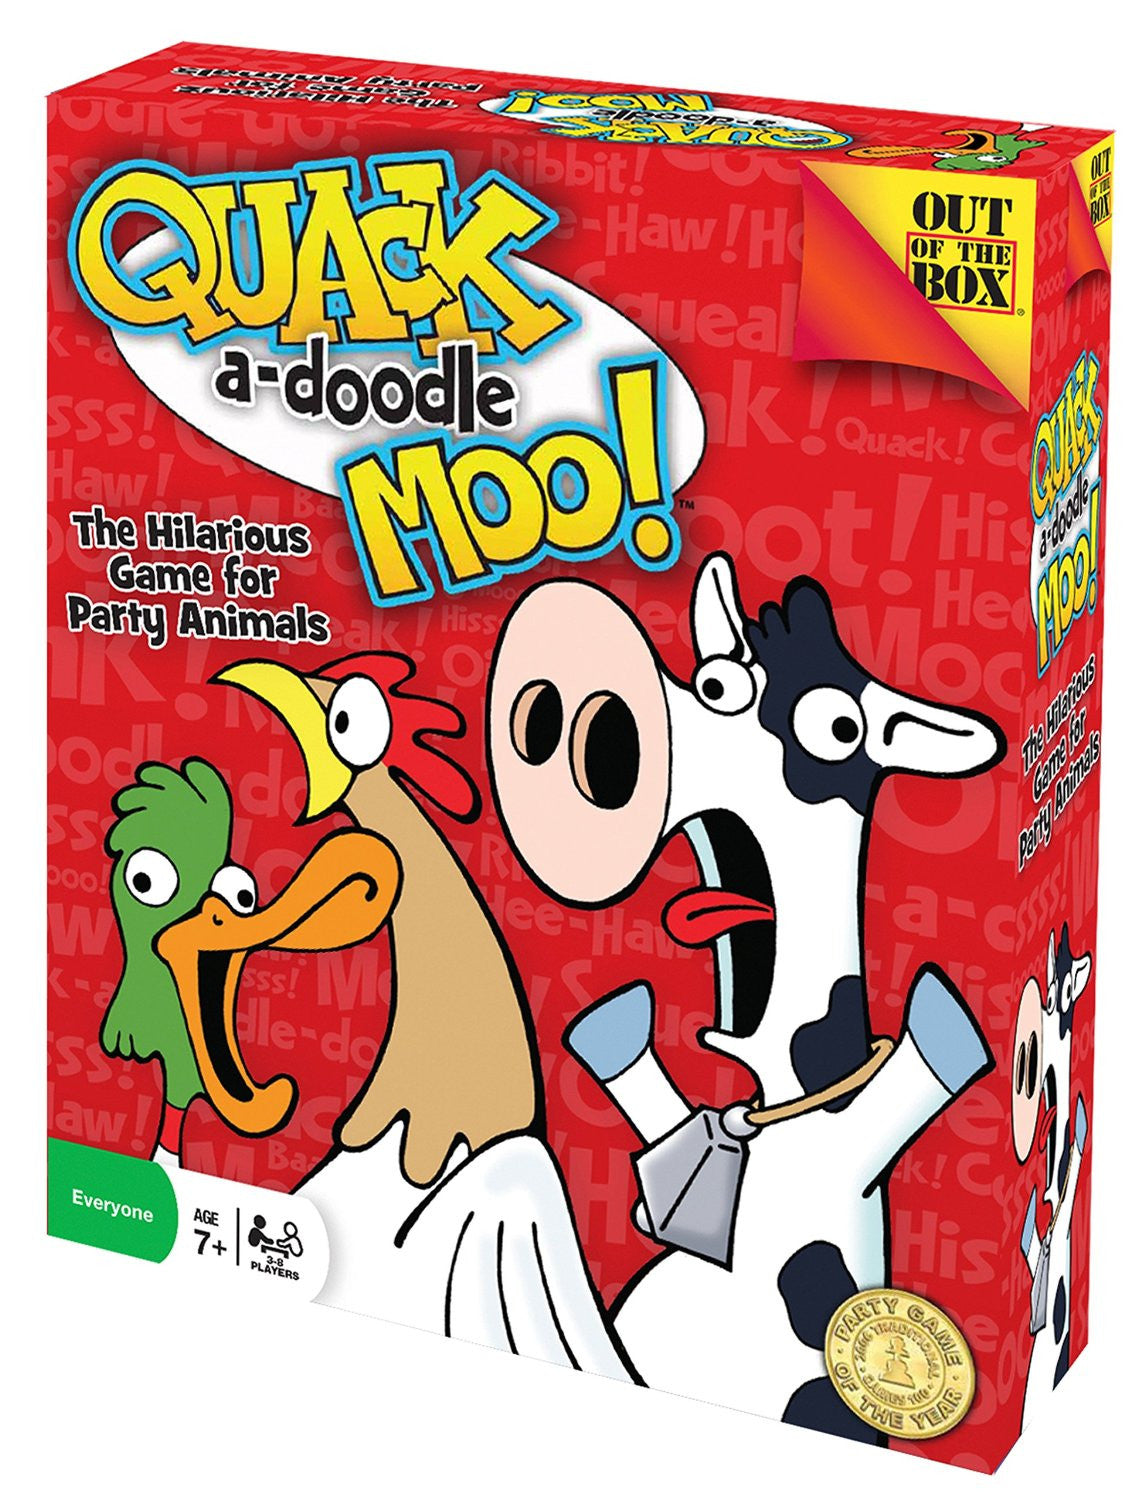 Quack-a-Doodle-Moo (Snorta) - Out of the Box